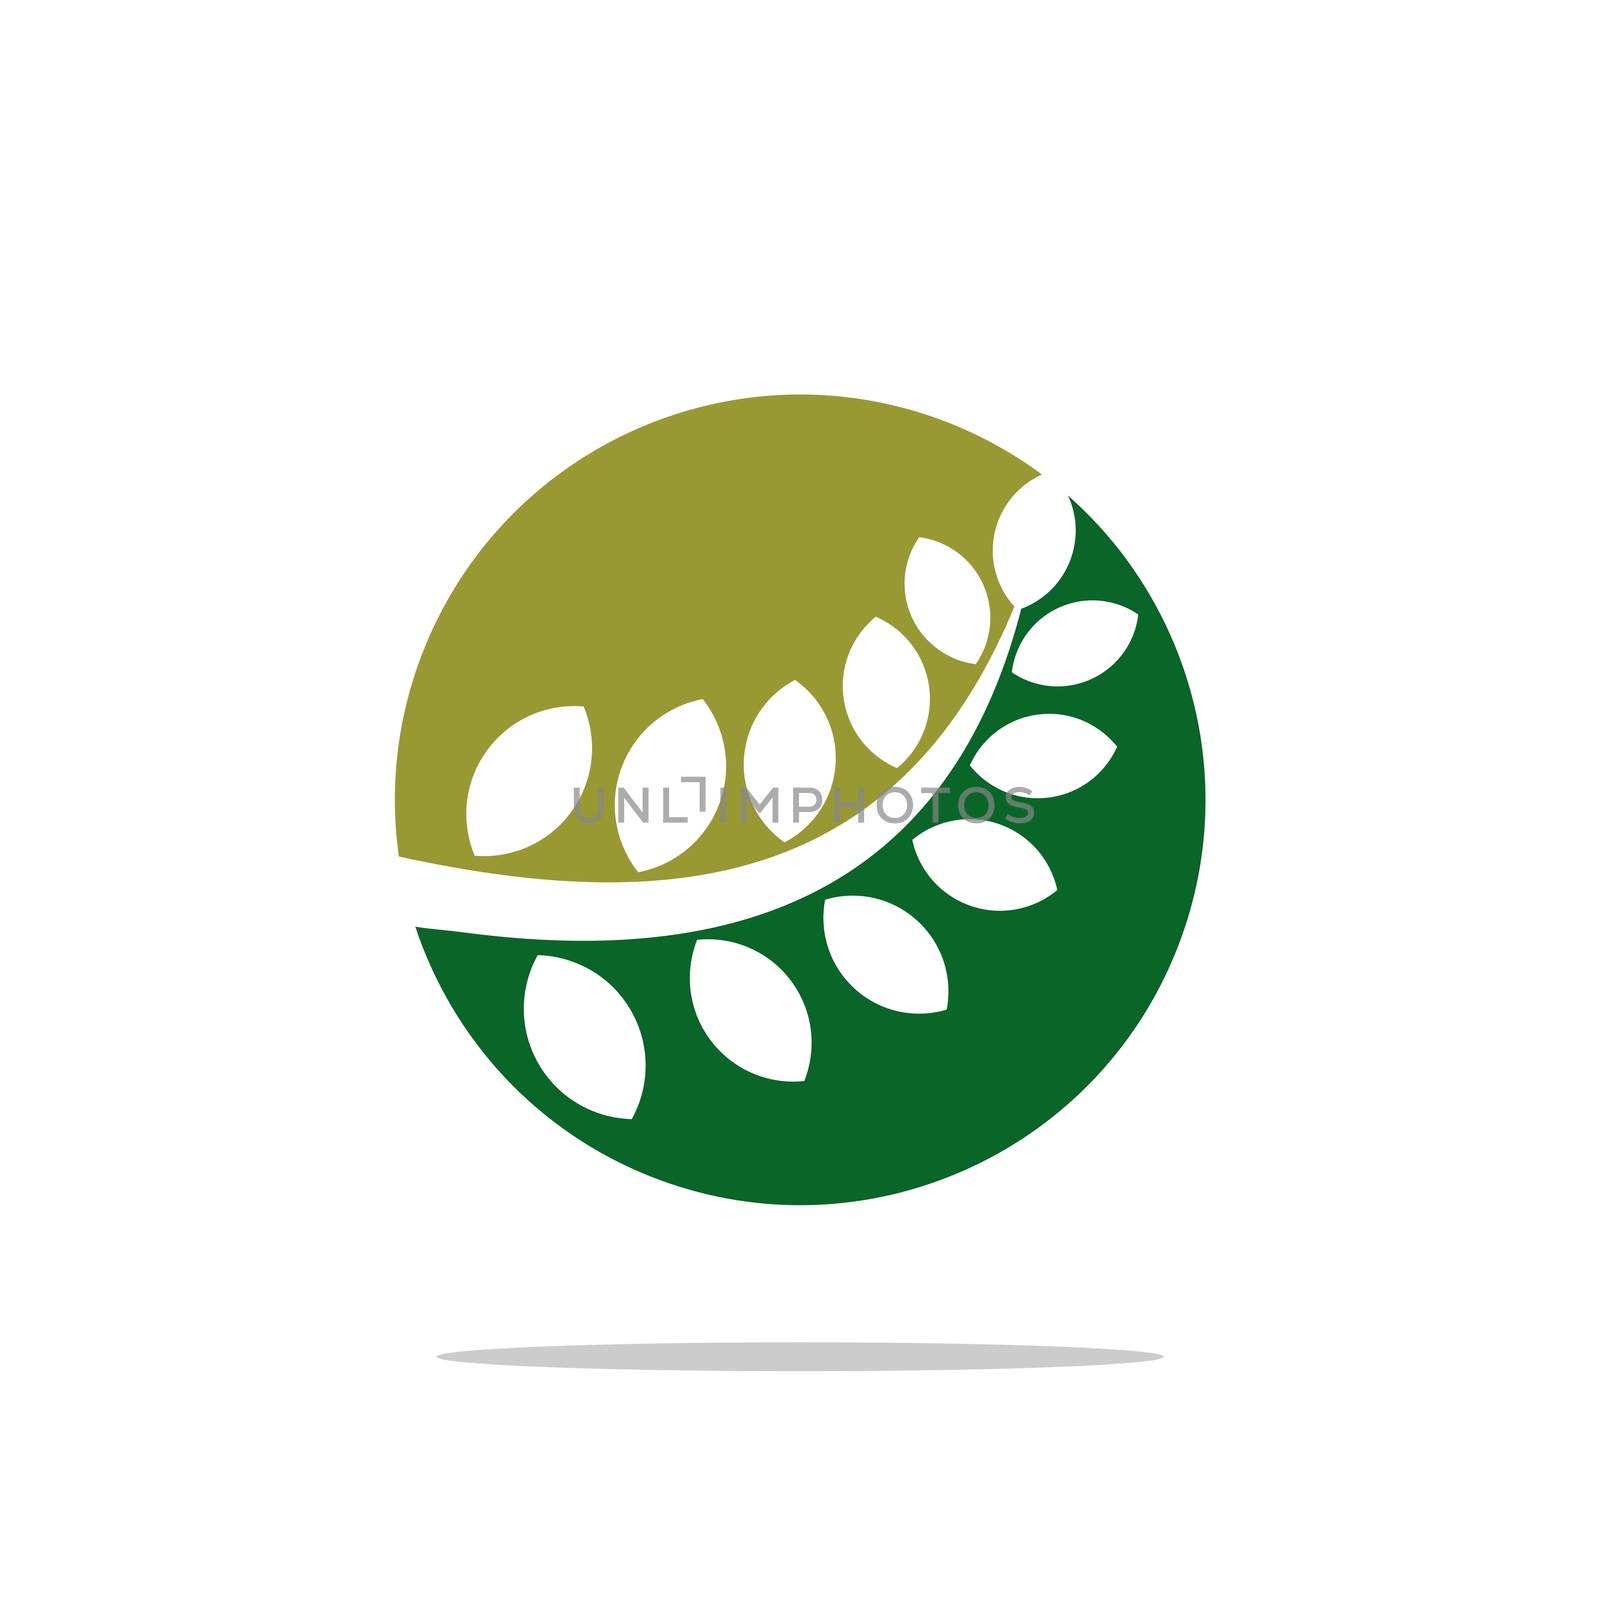 Green Leaves Circle Ornamental Logo Template Illustration Design EPS 10 by soponyono1